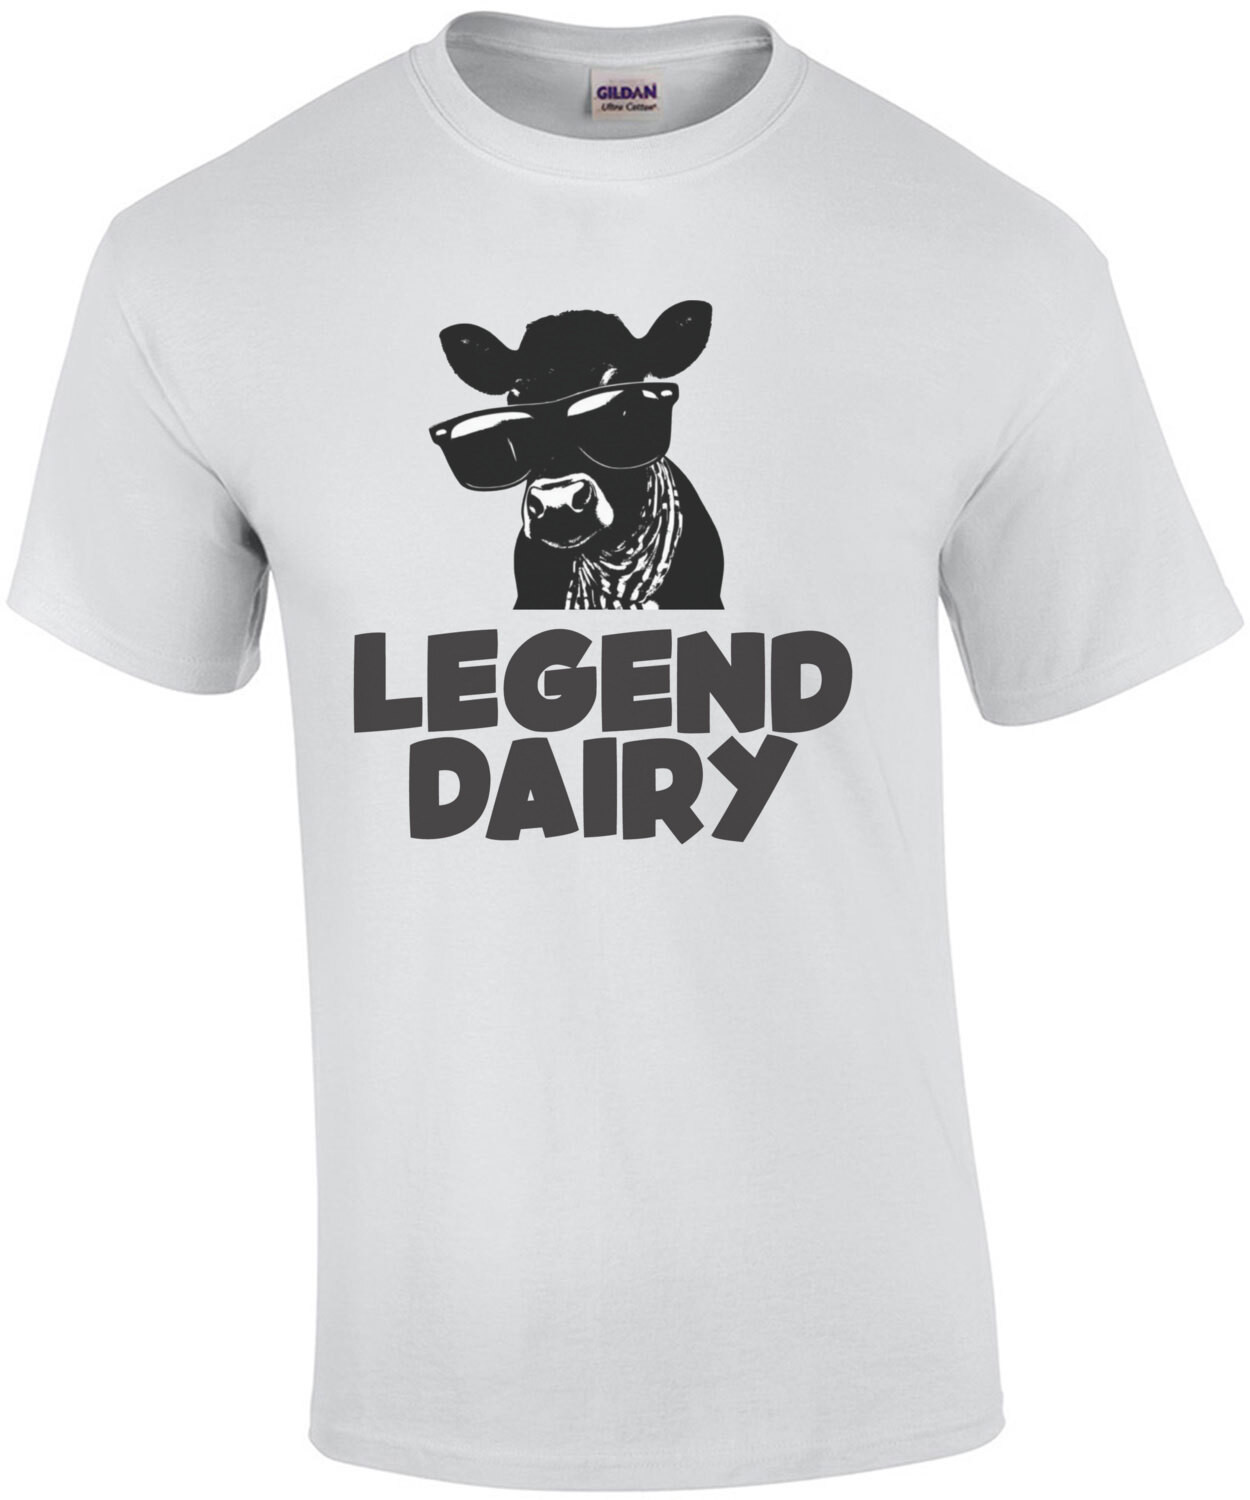 Legend Dairy - Funny Cow Pun T-Shirt